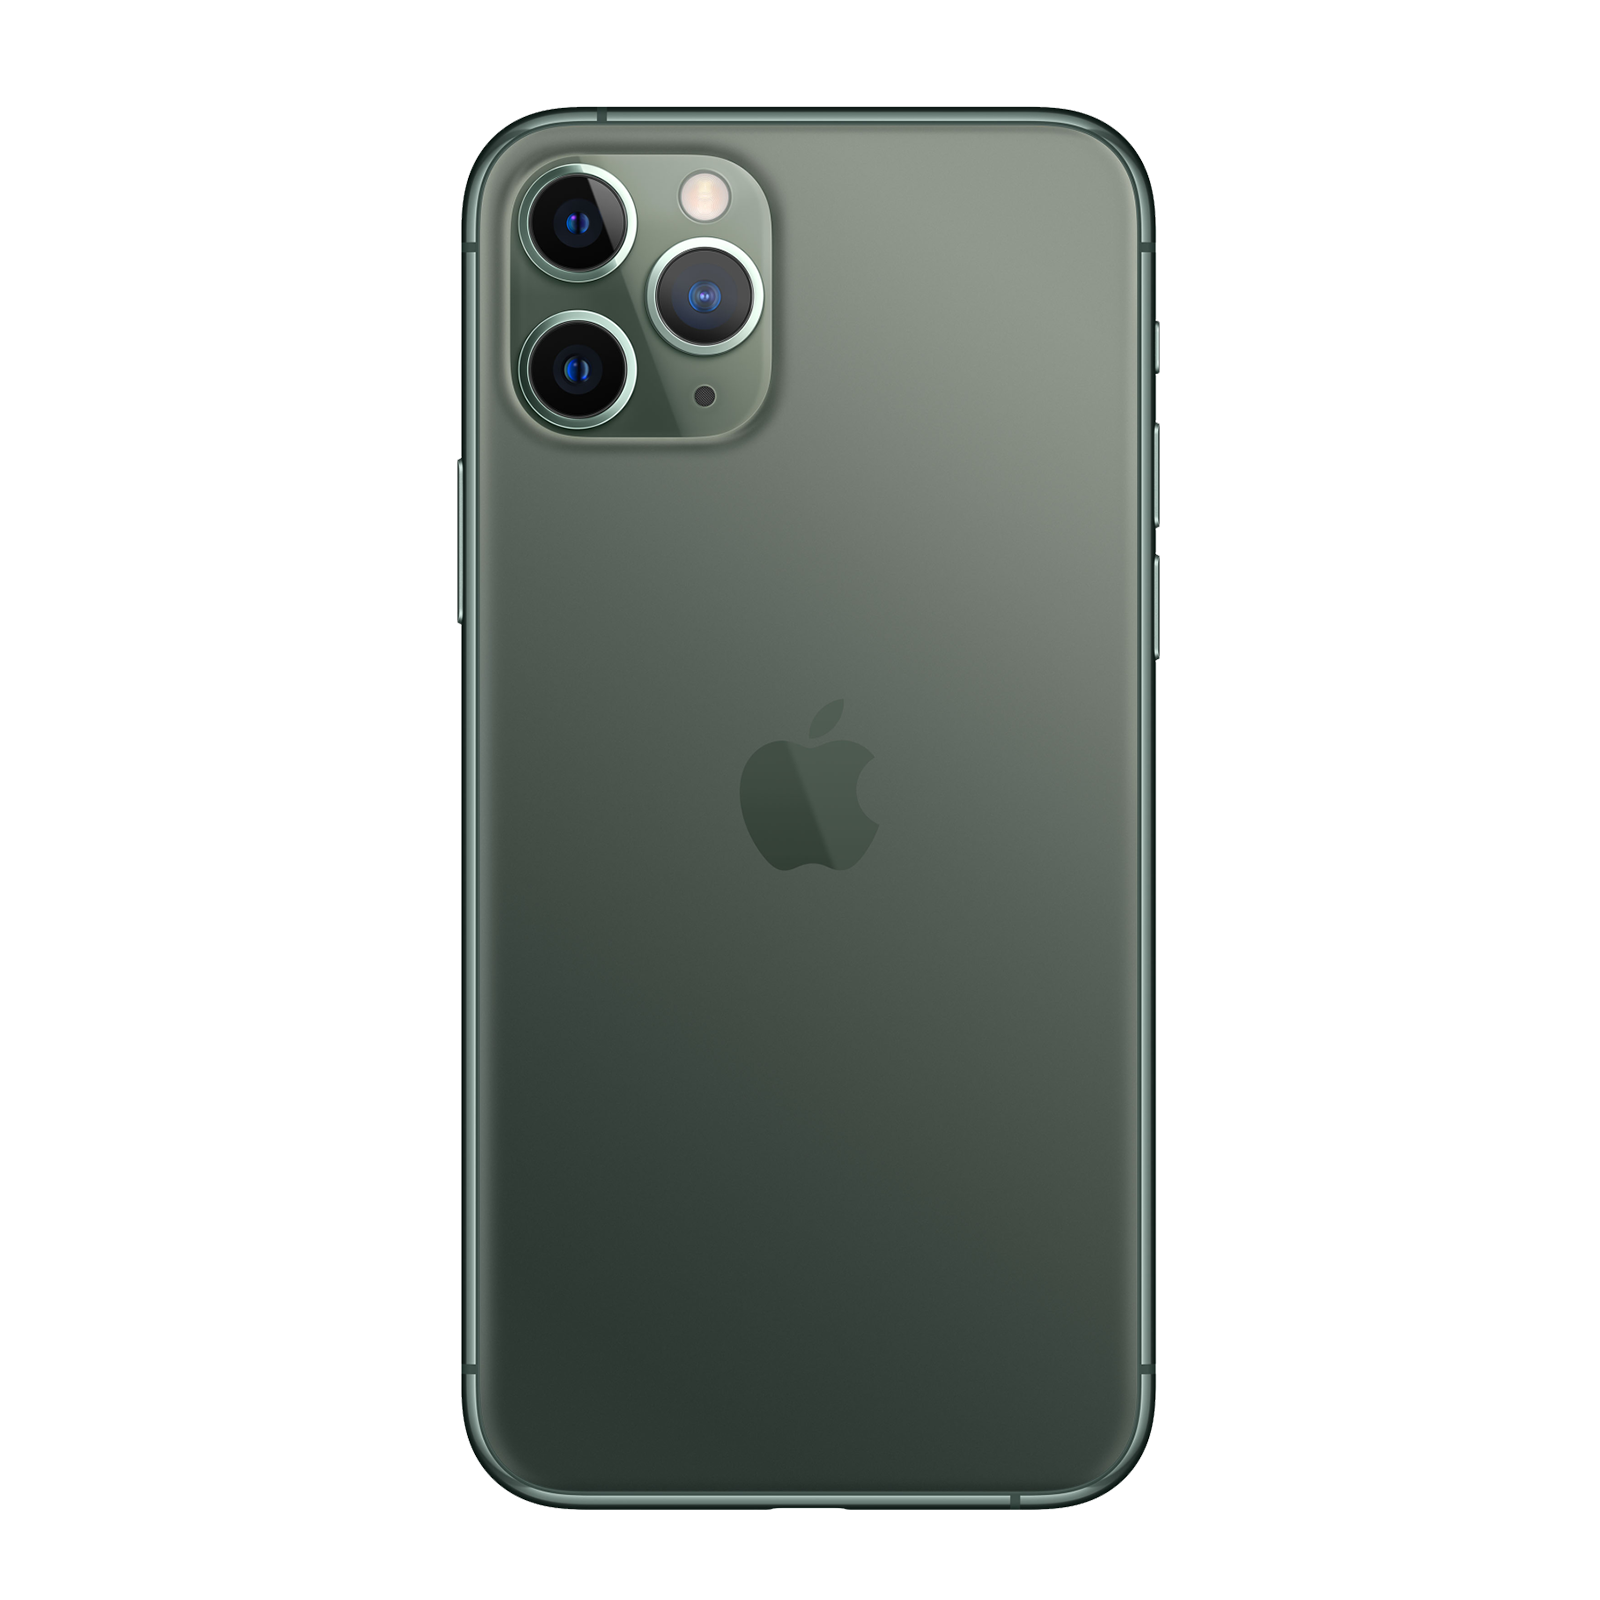 Apple iPhone 11 Pro 512GB Midnight Green Very Good - Unlocked